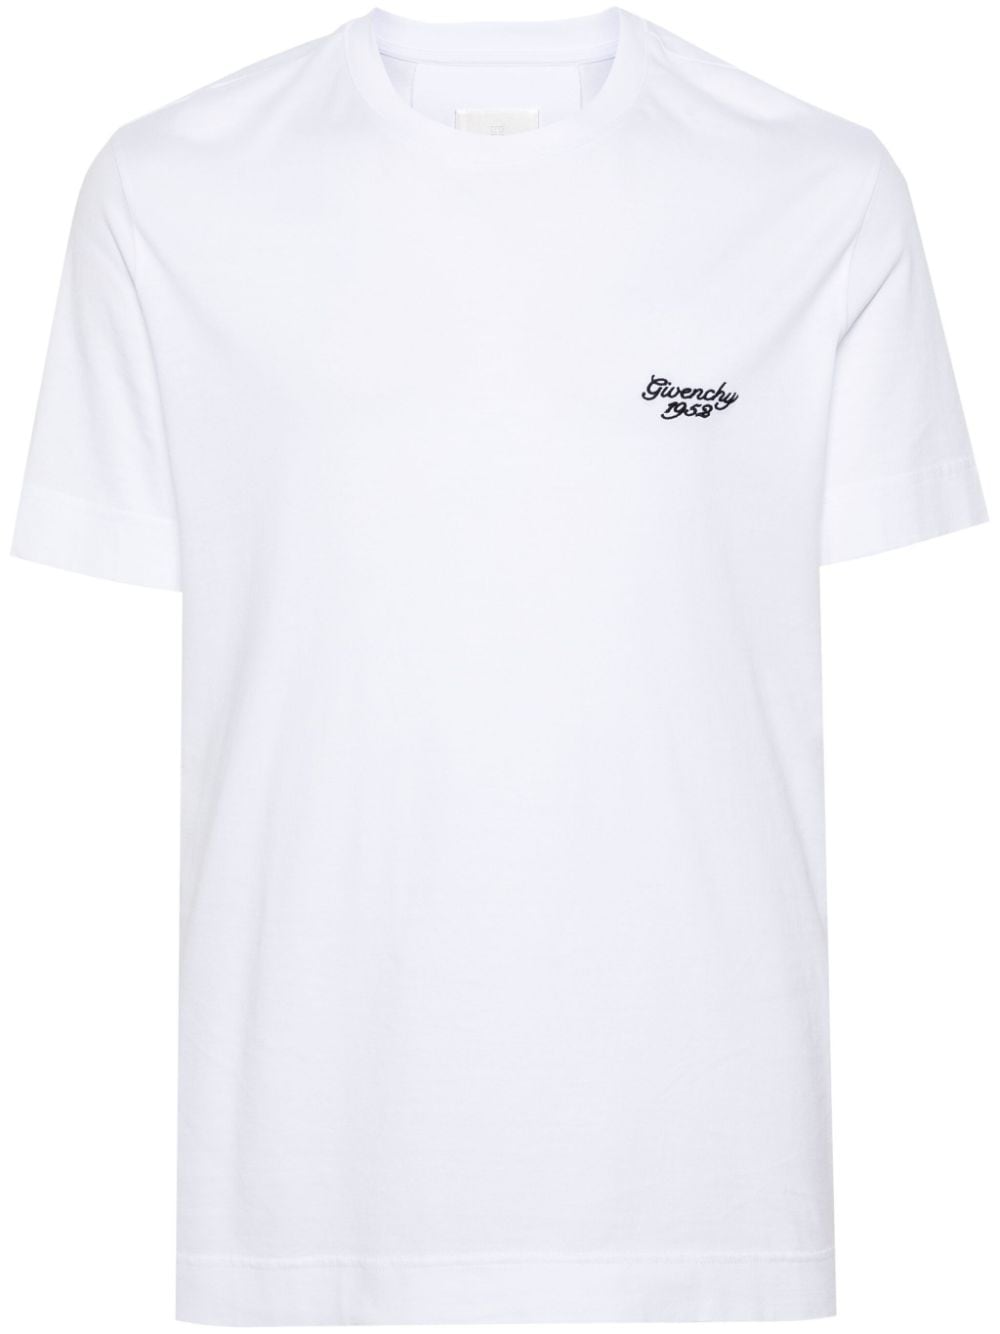 White Front logo t-shirt